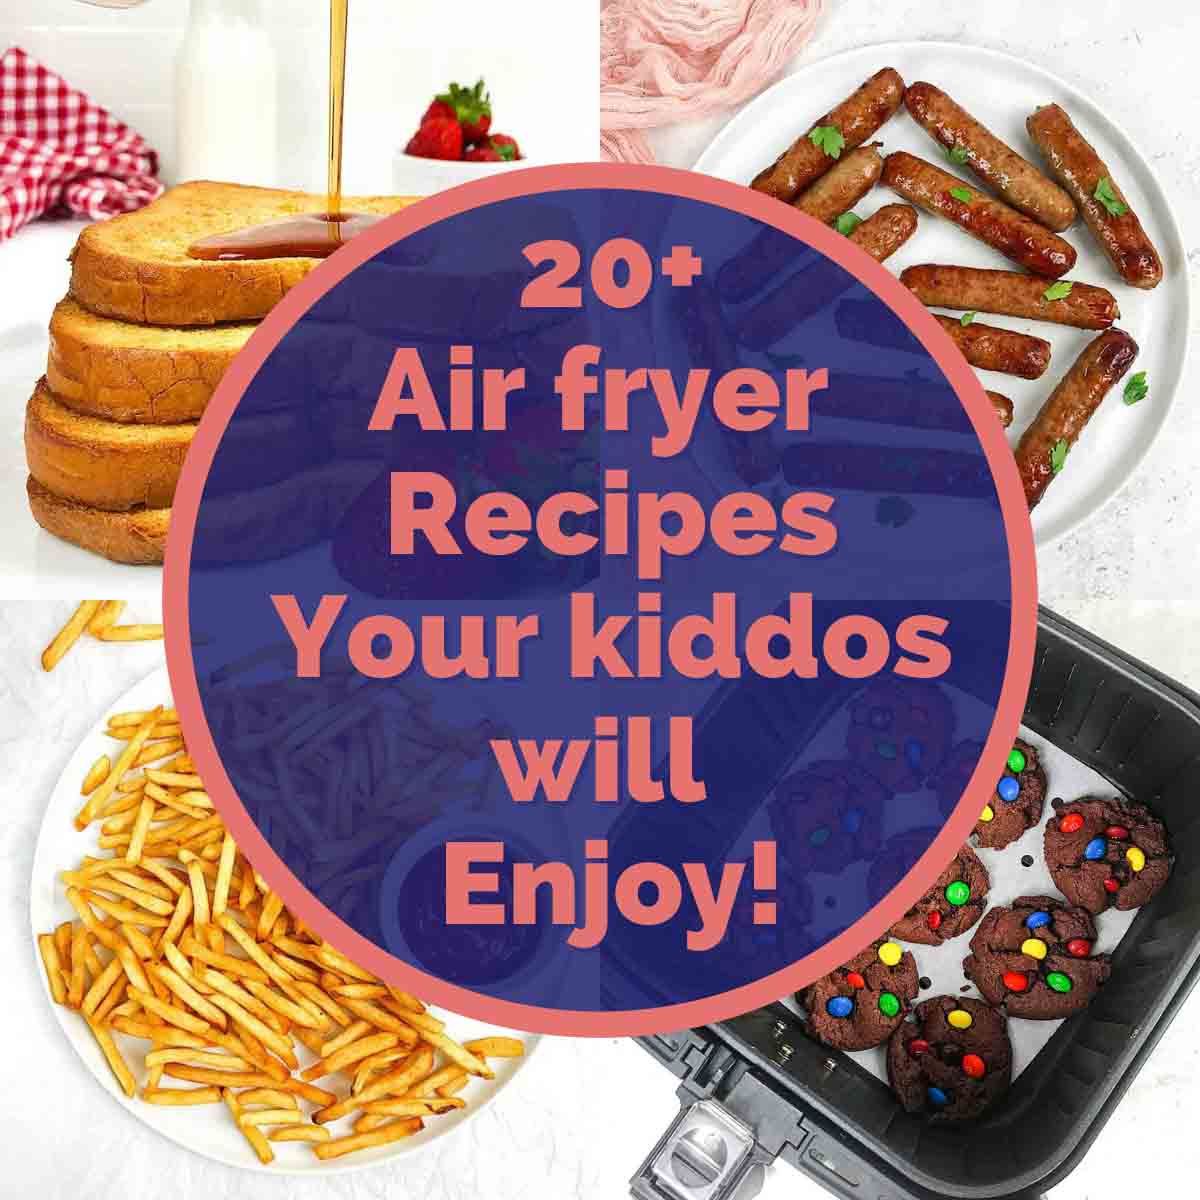 Air fryer recipes for kids - Air Fryer Yum